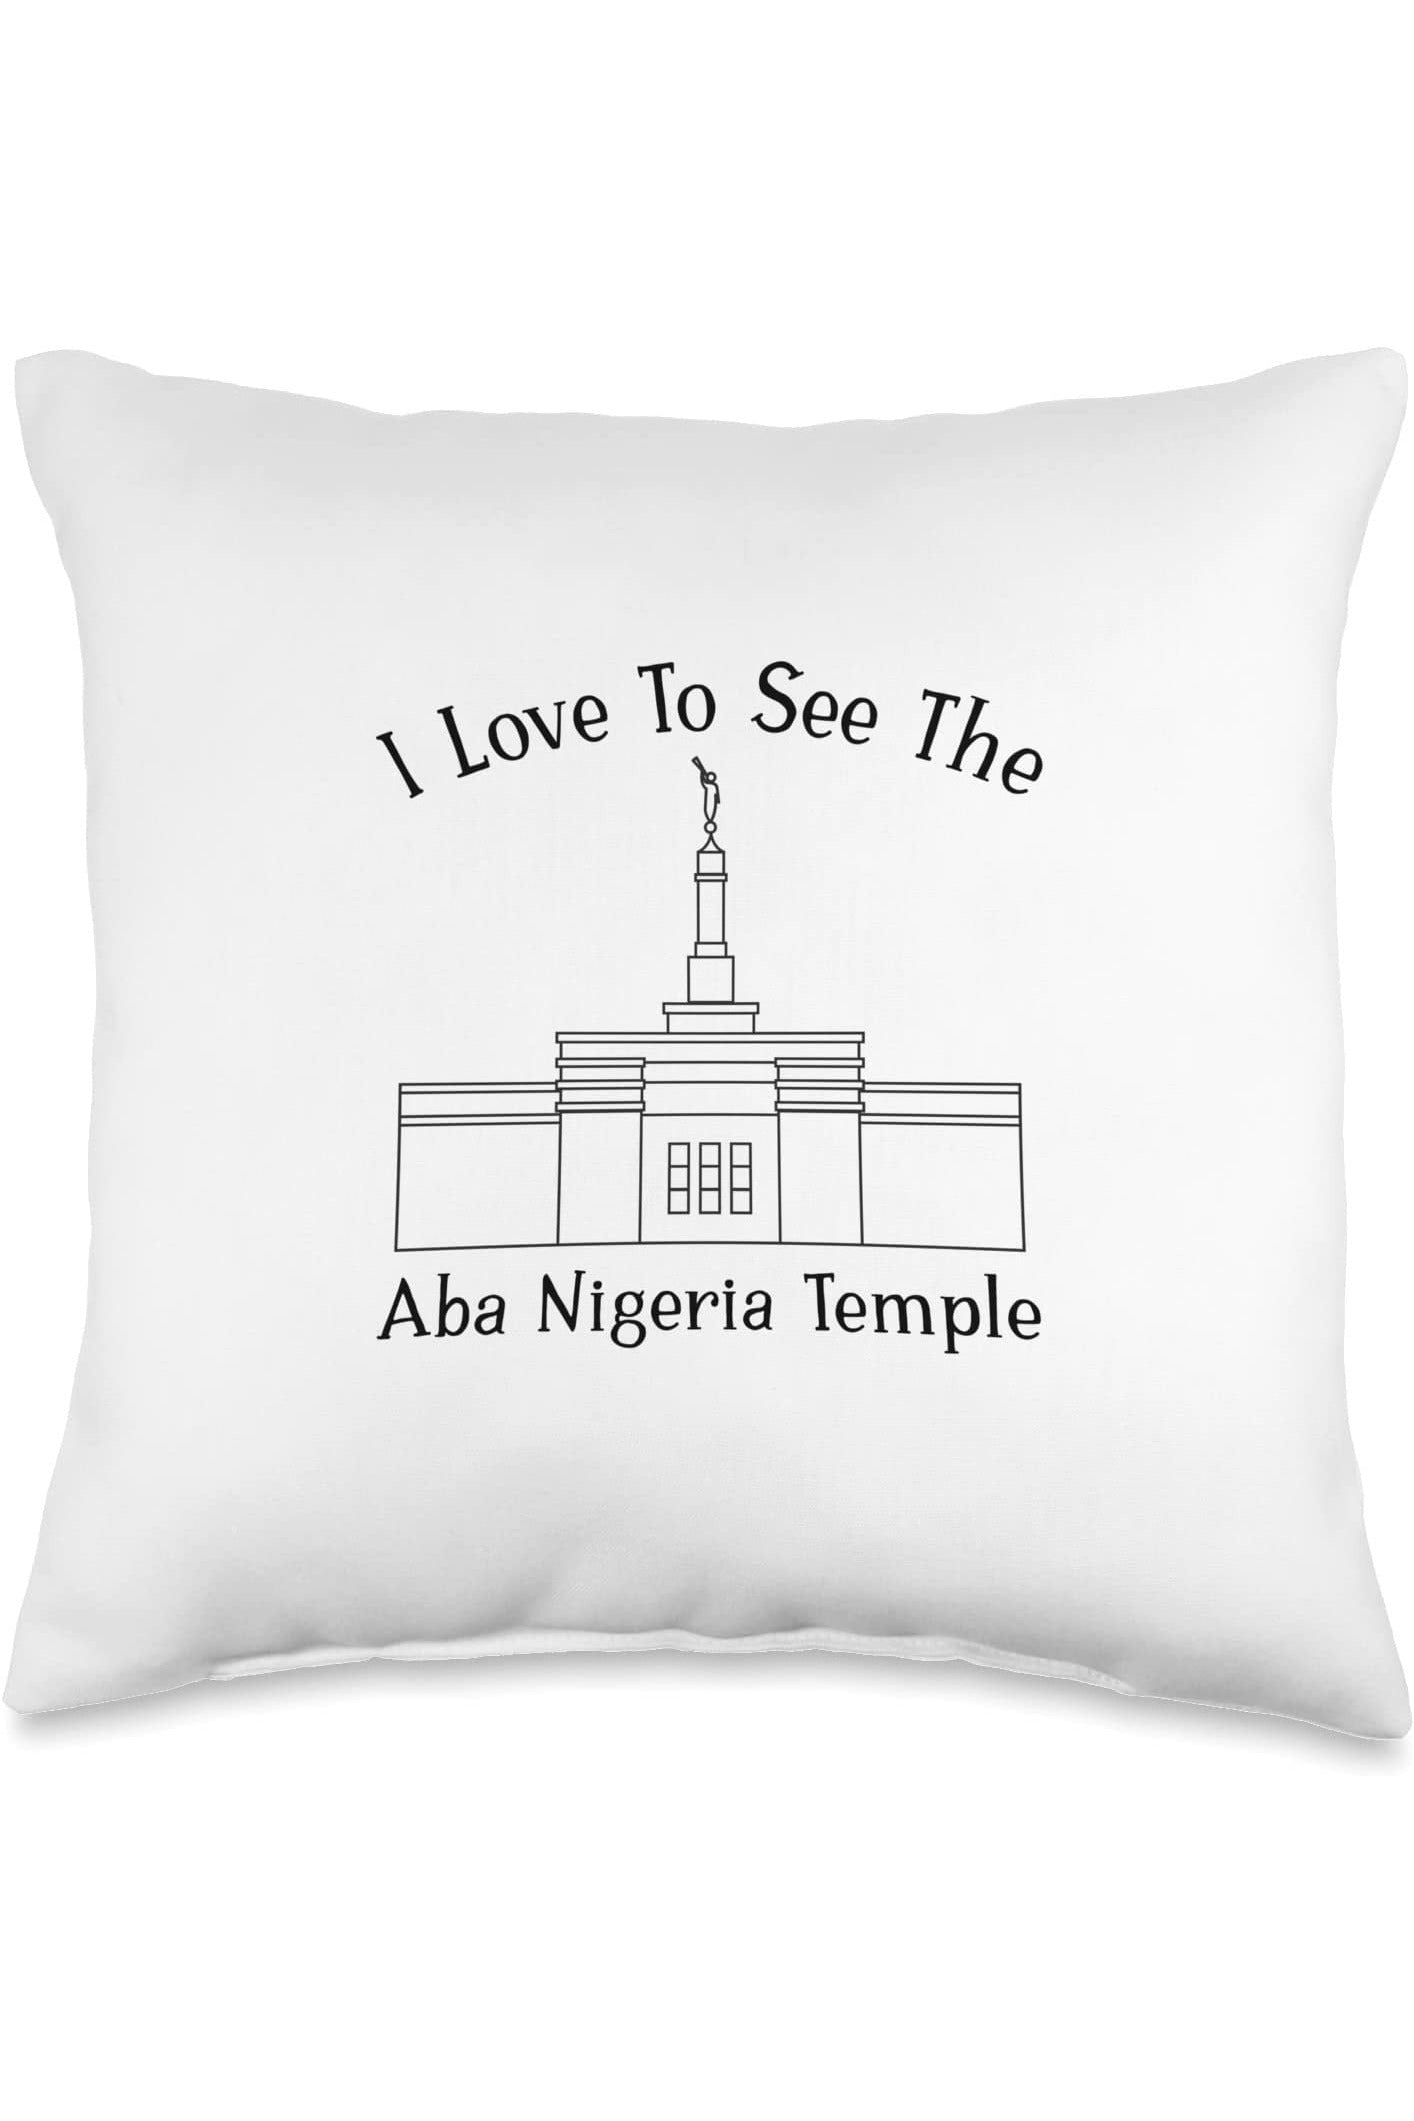 Aba Nigeria Temple Throw Pillows - Happy Style (English) US